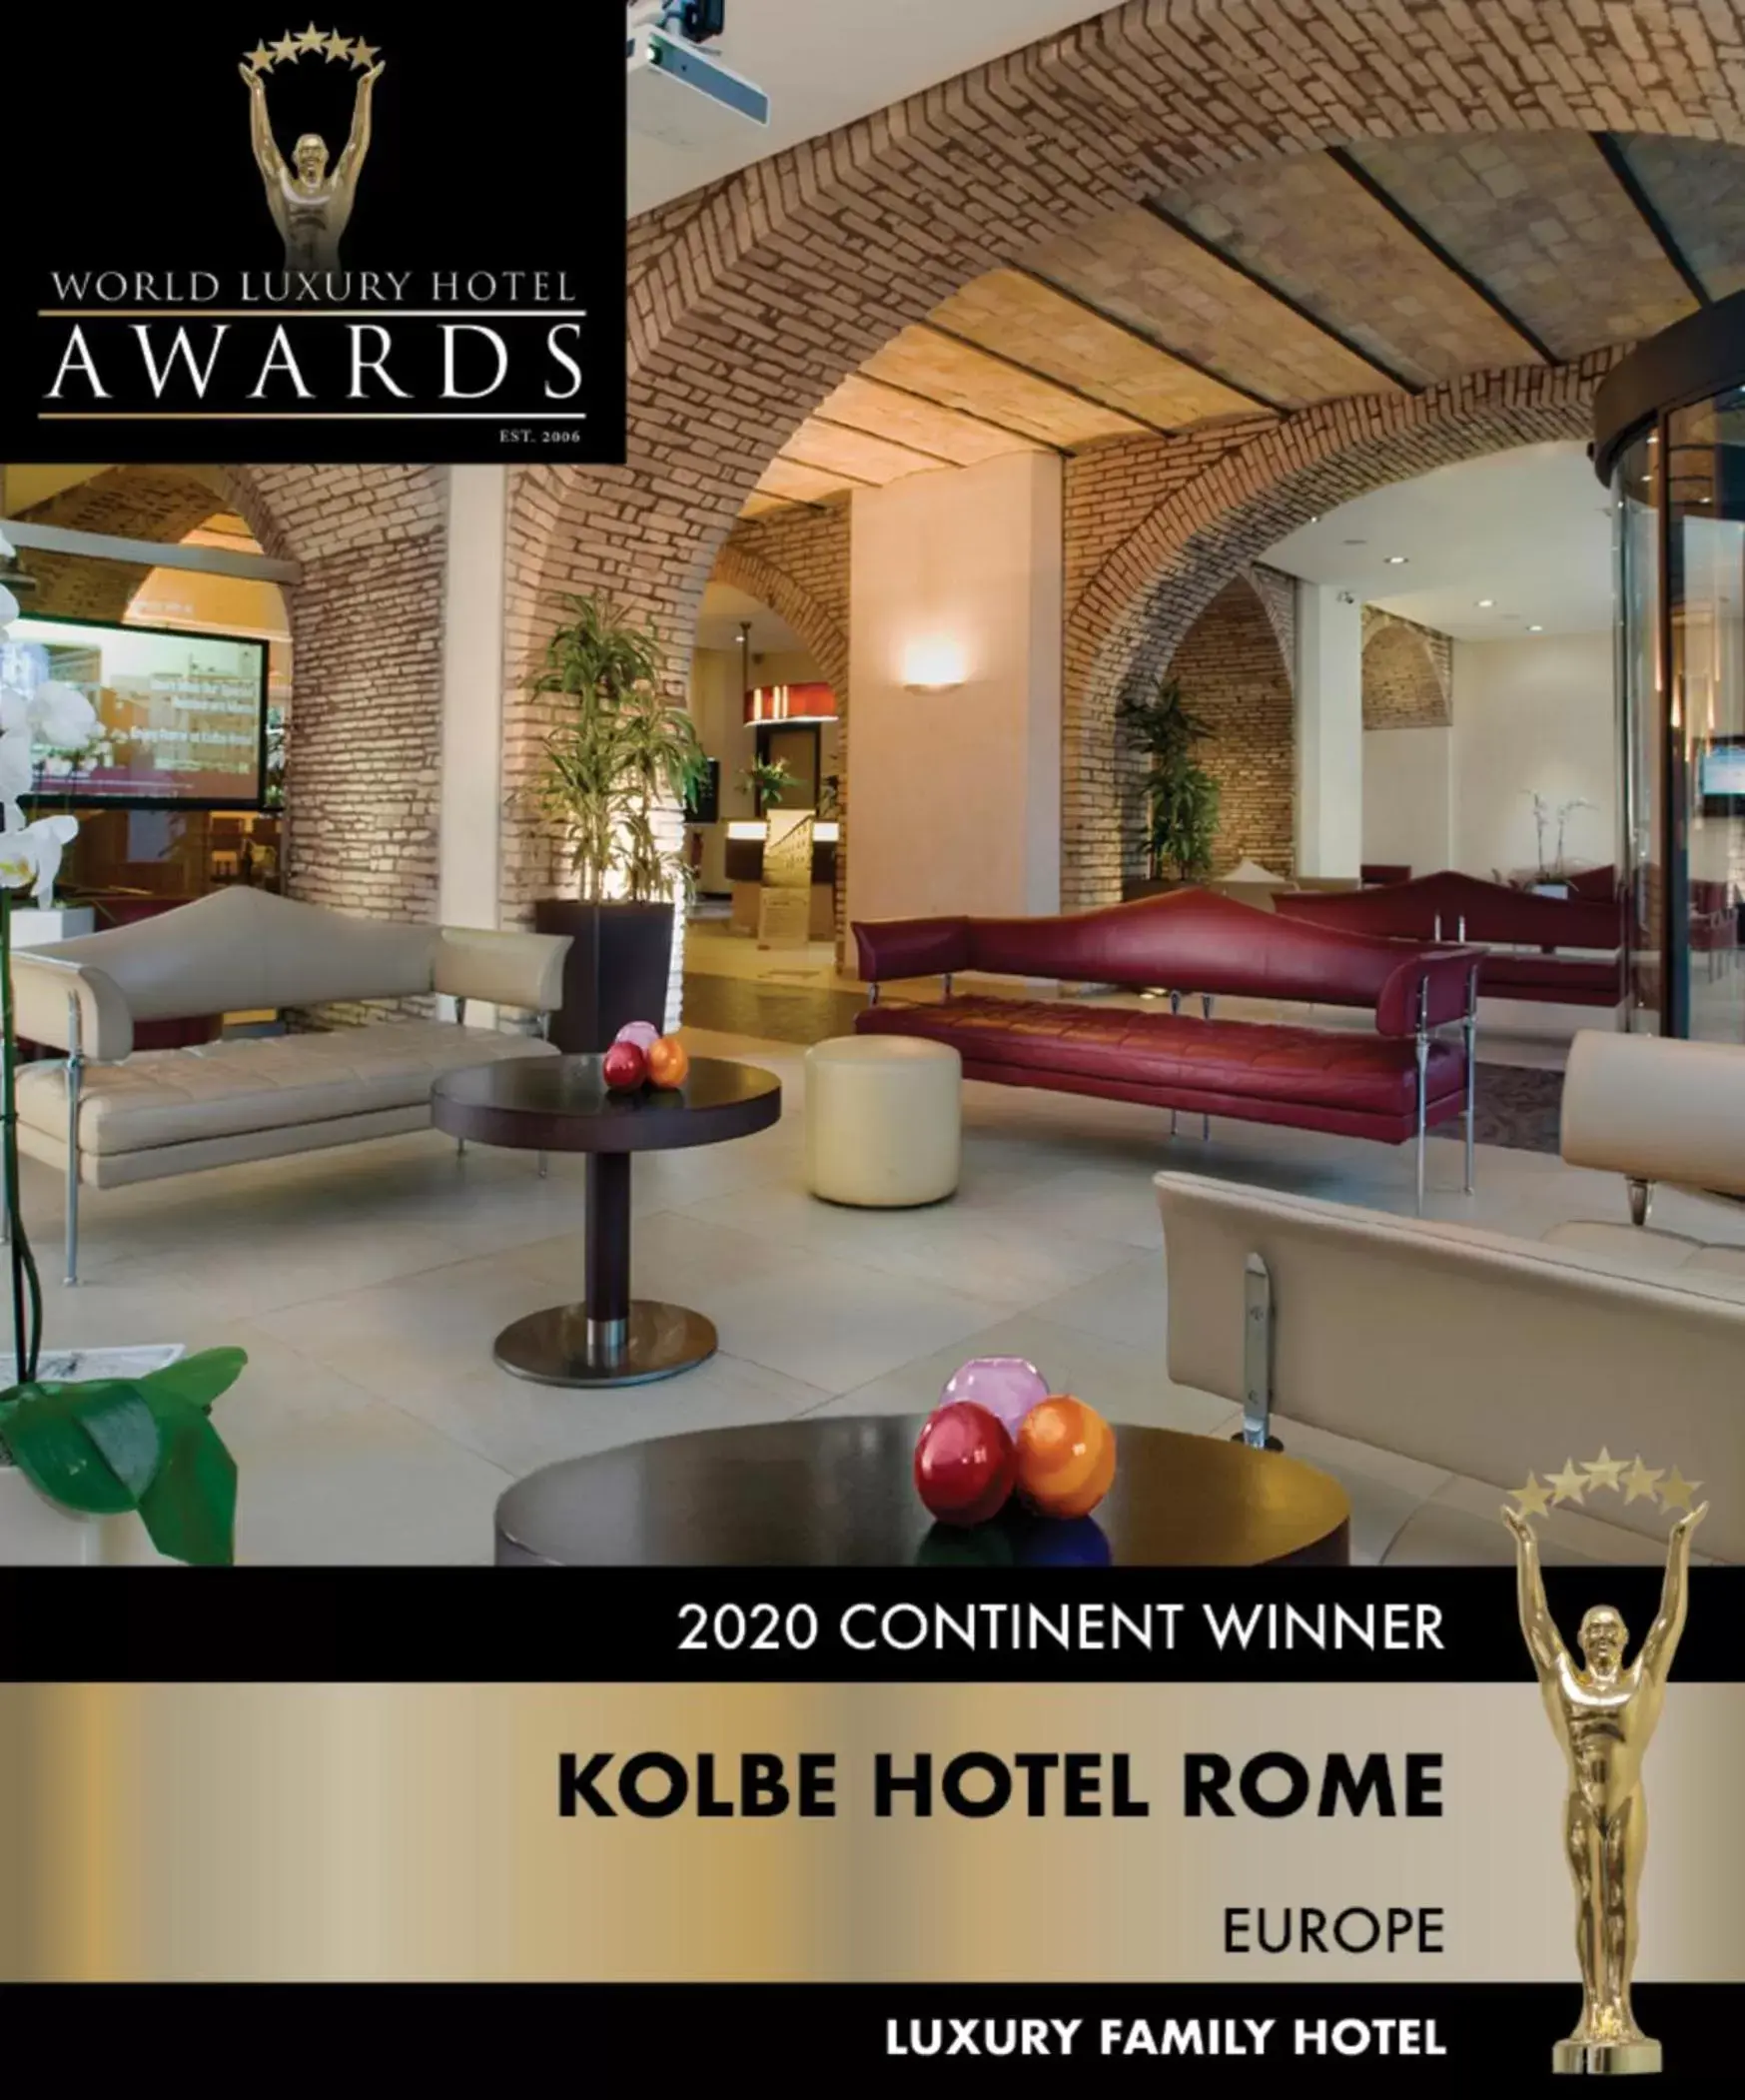 Certificate/Award in Kolbe Hotel Rome